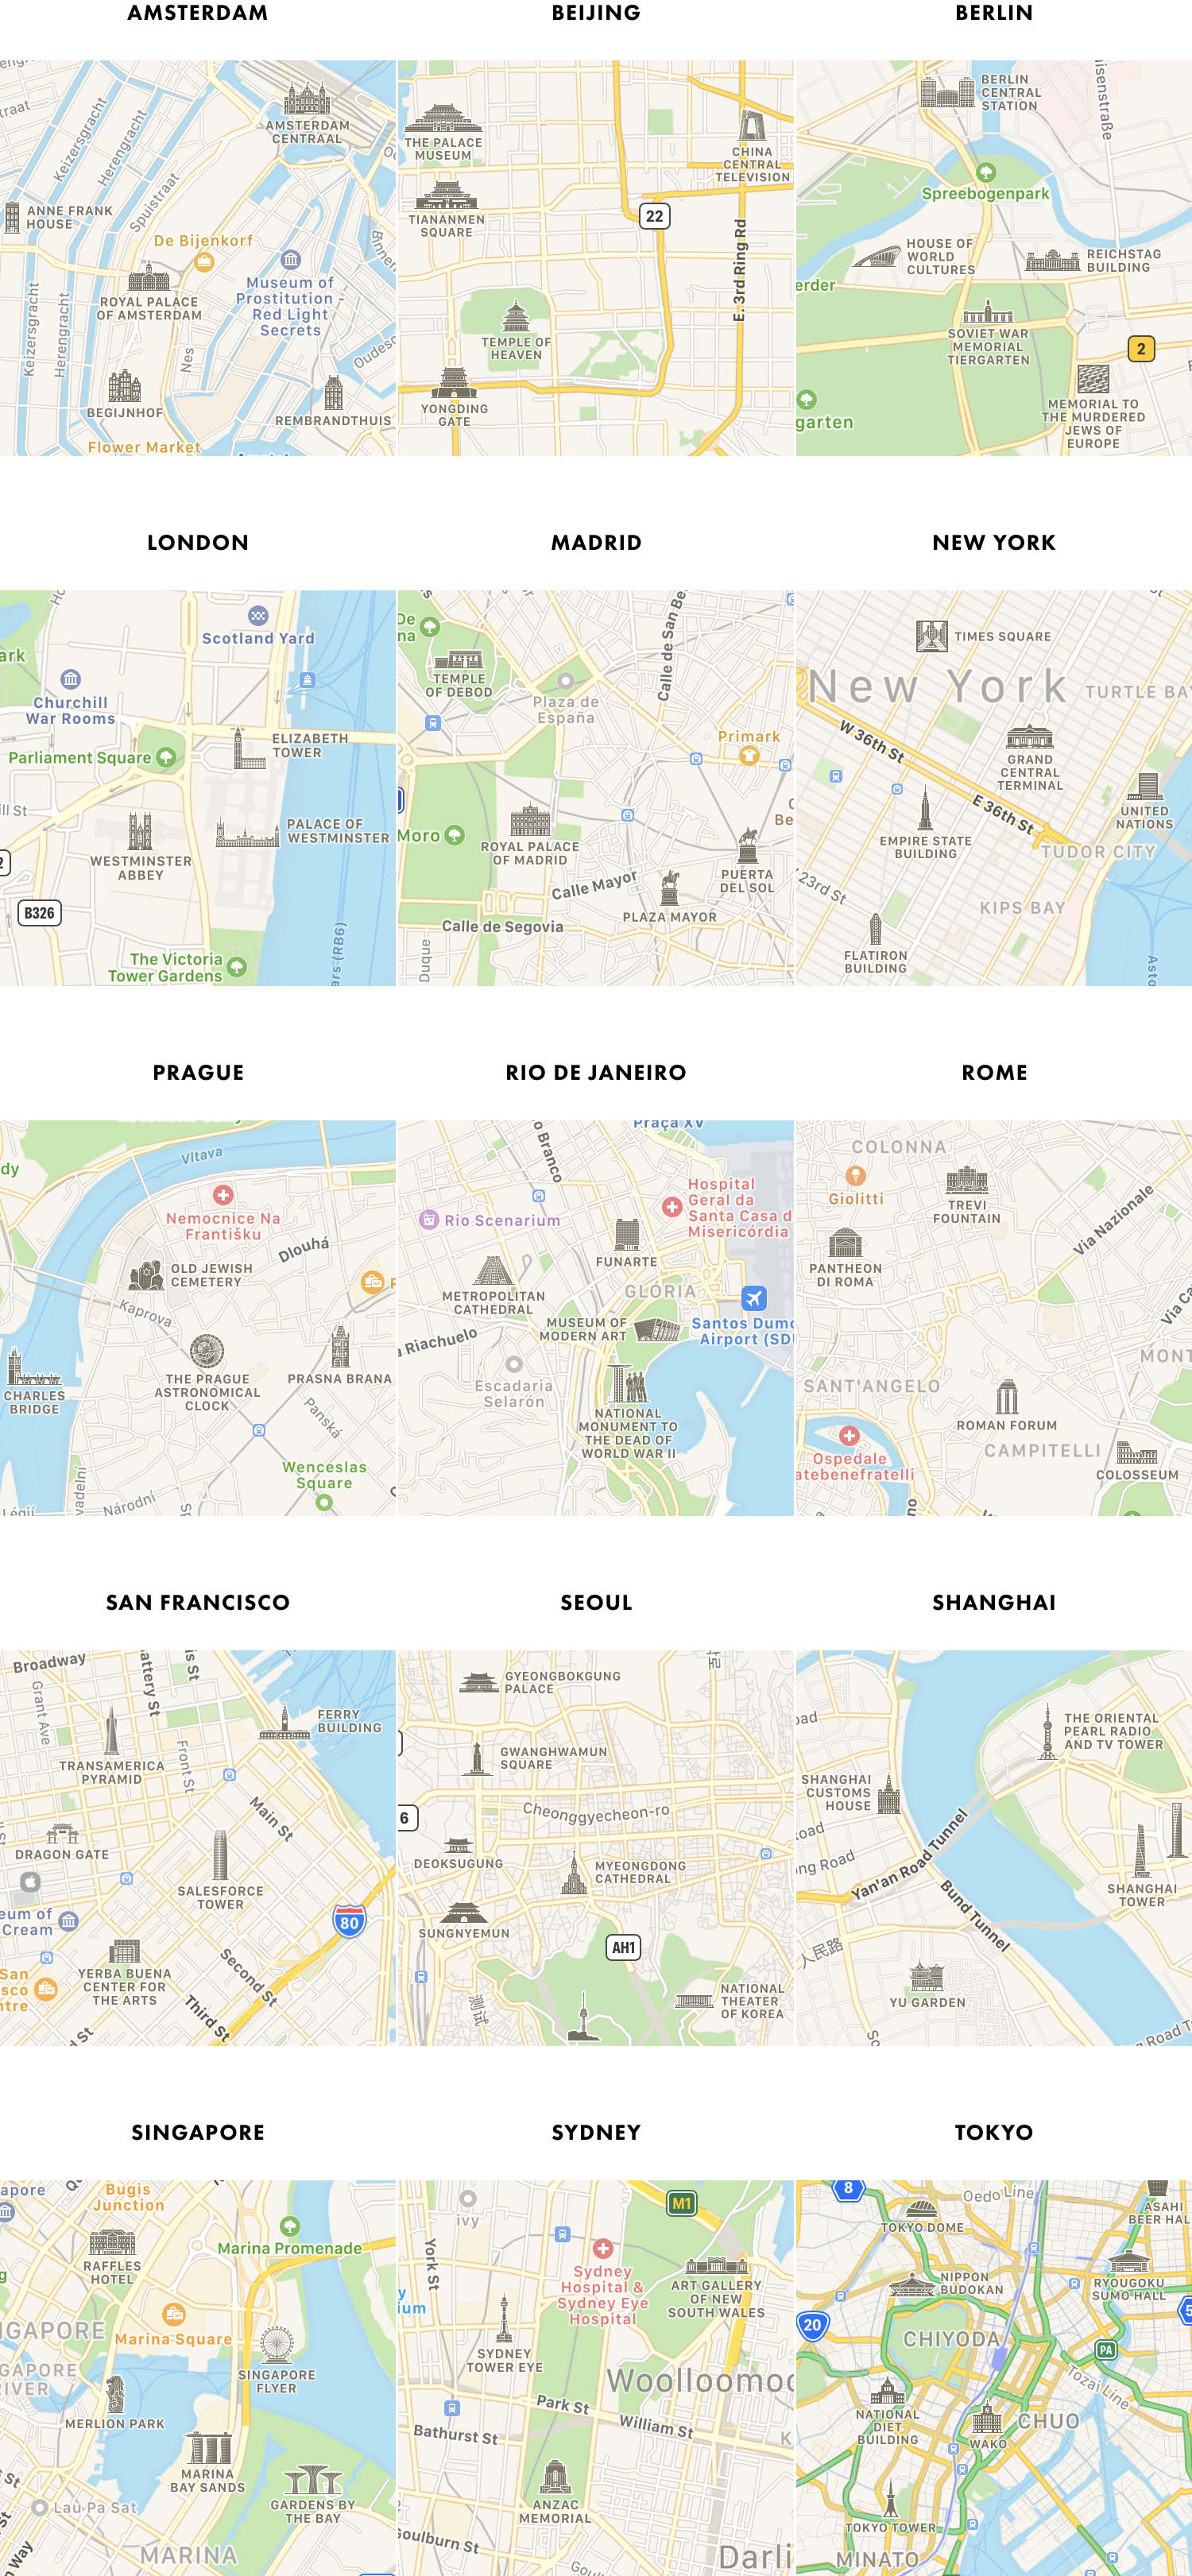 google maps adds apple style landmark icons